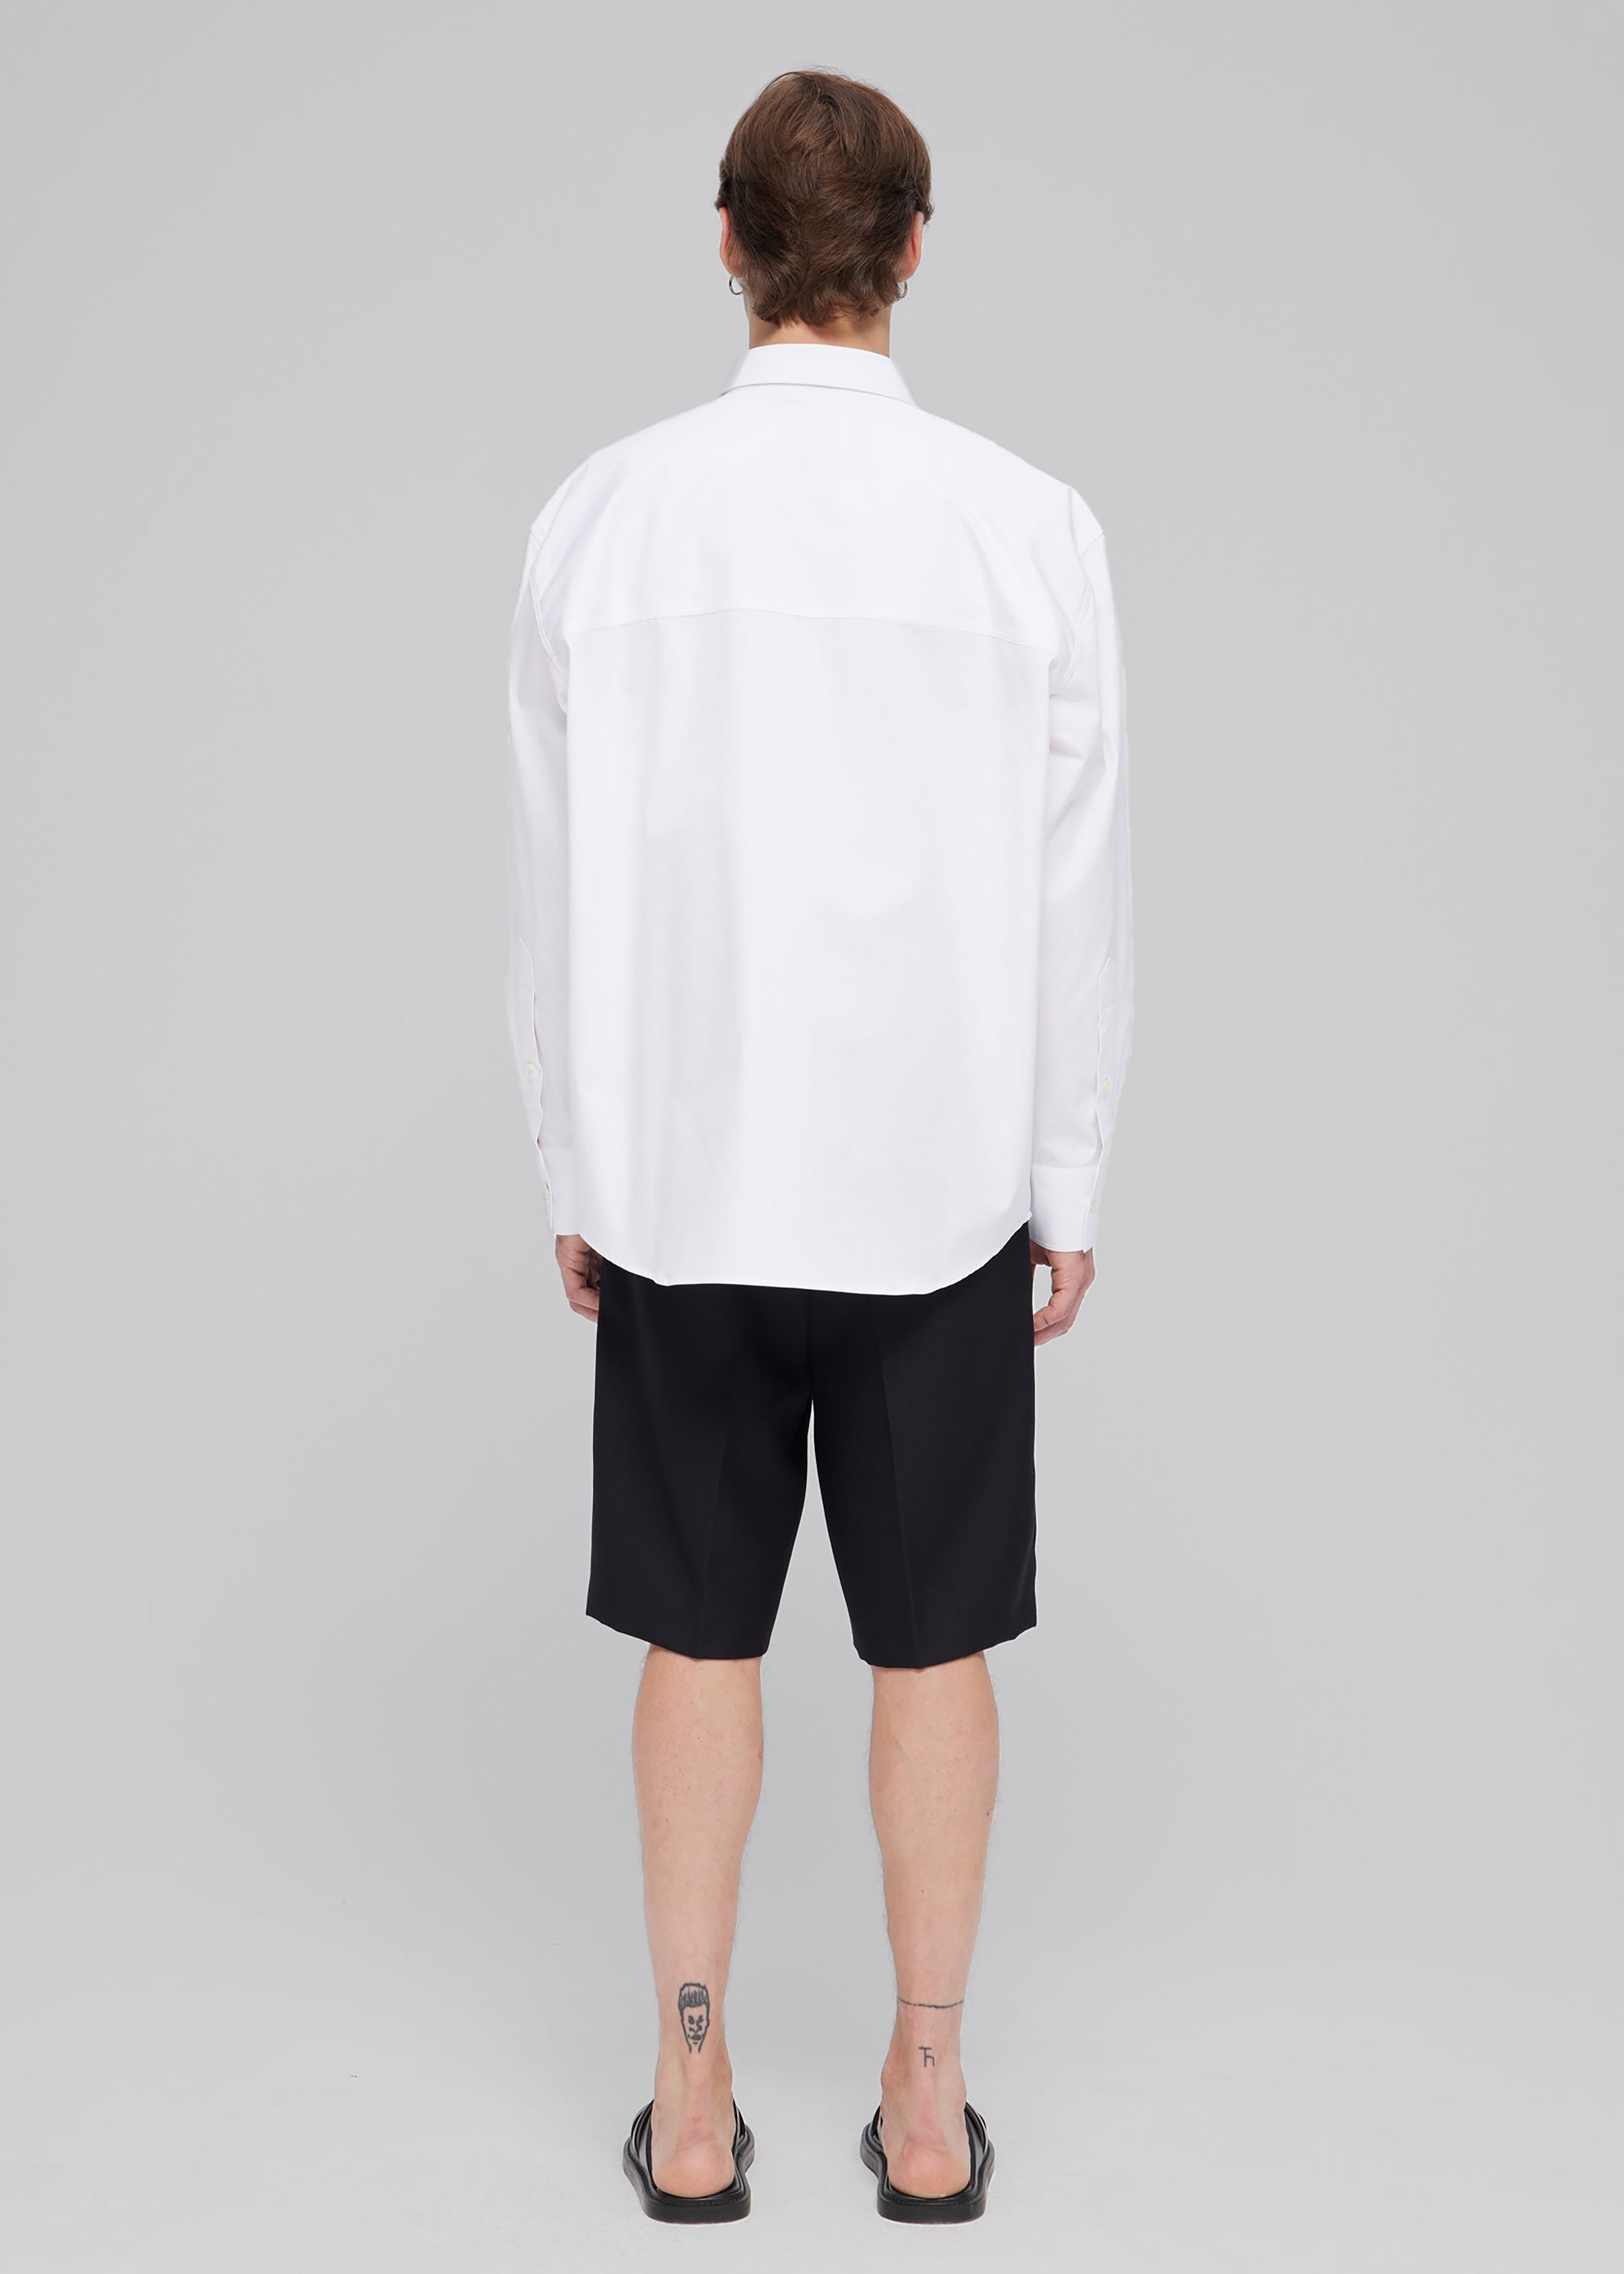 Róhe Unisex Classic Shirt - White - 10